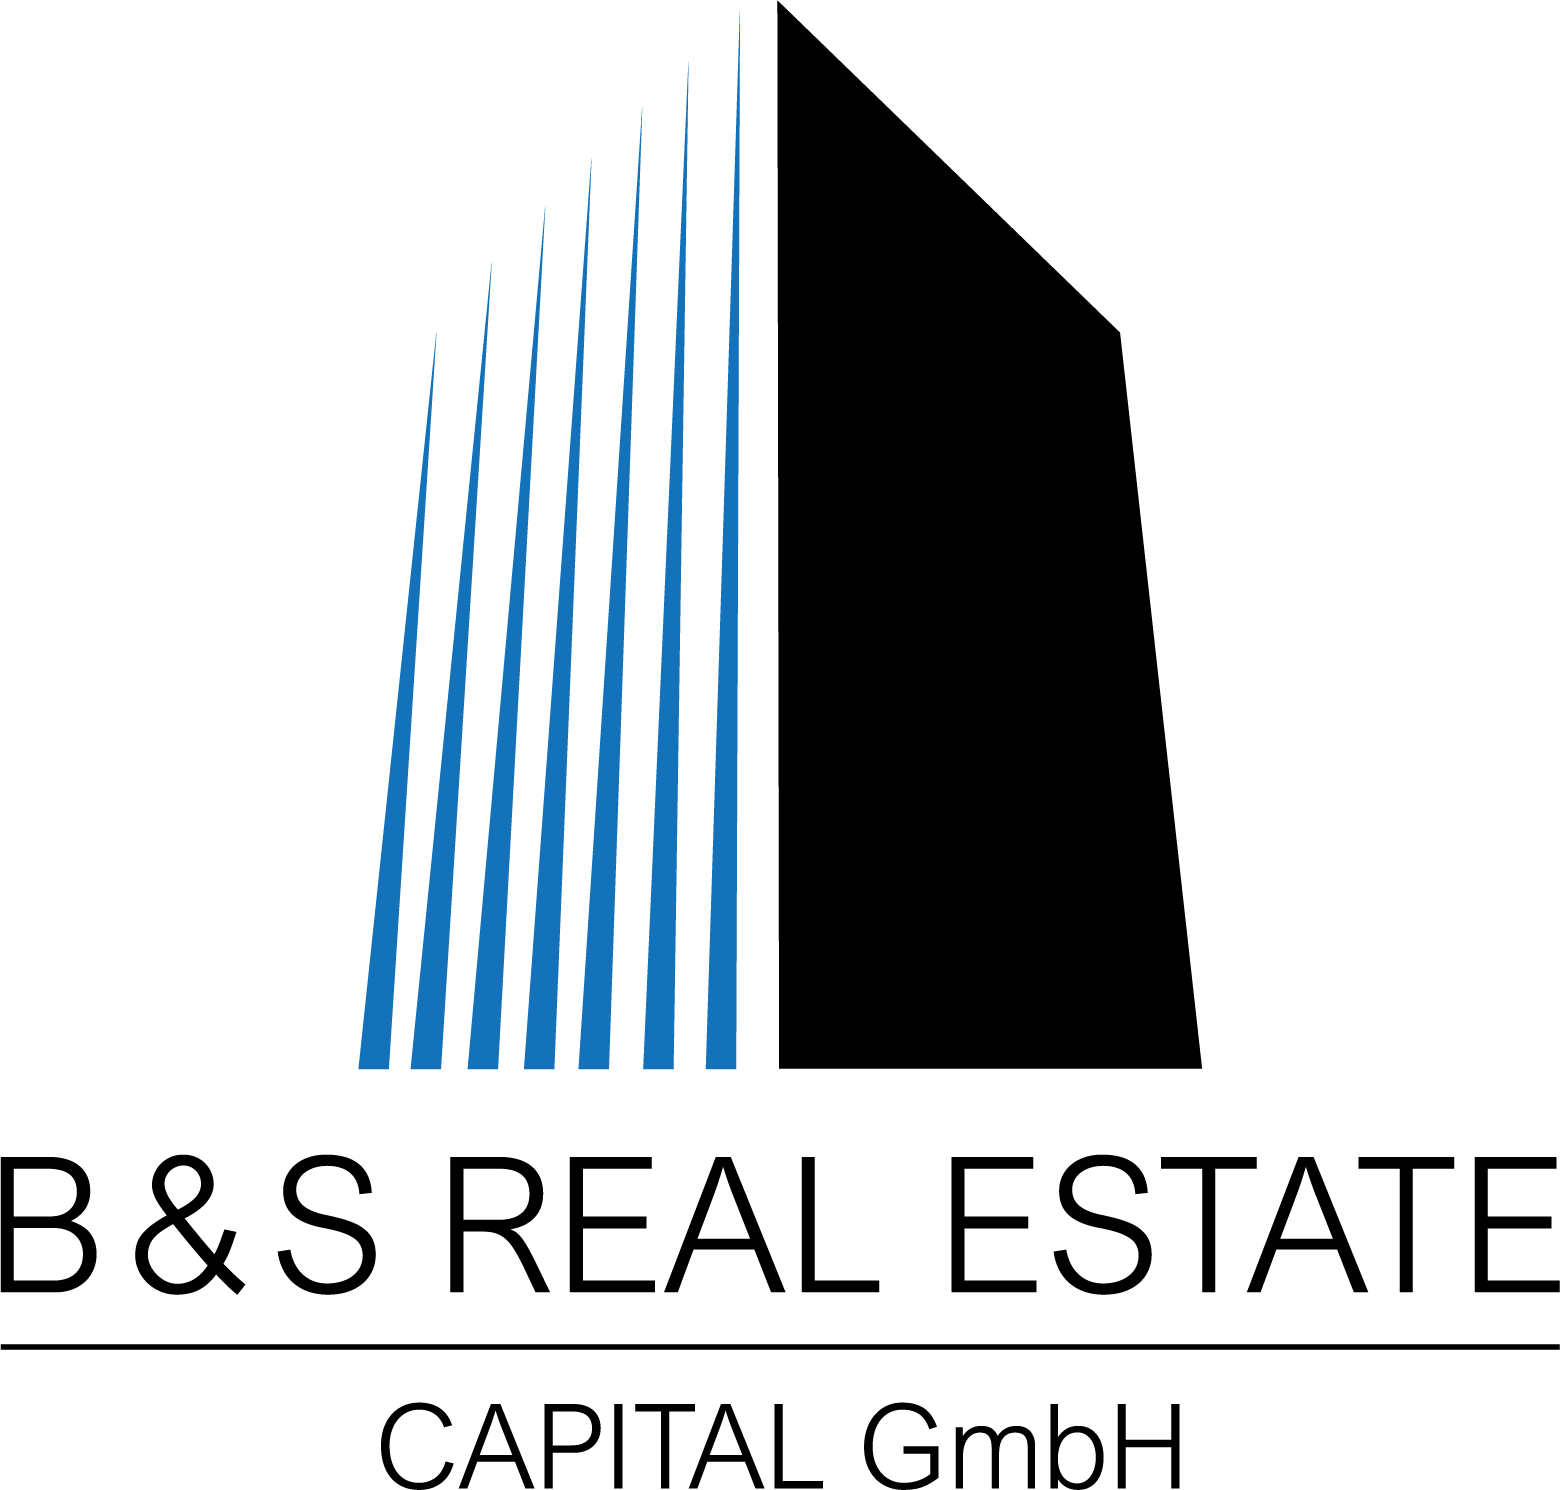 B&S REAL ESTATE CAPITAL GmbH Logo